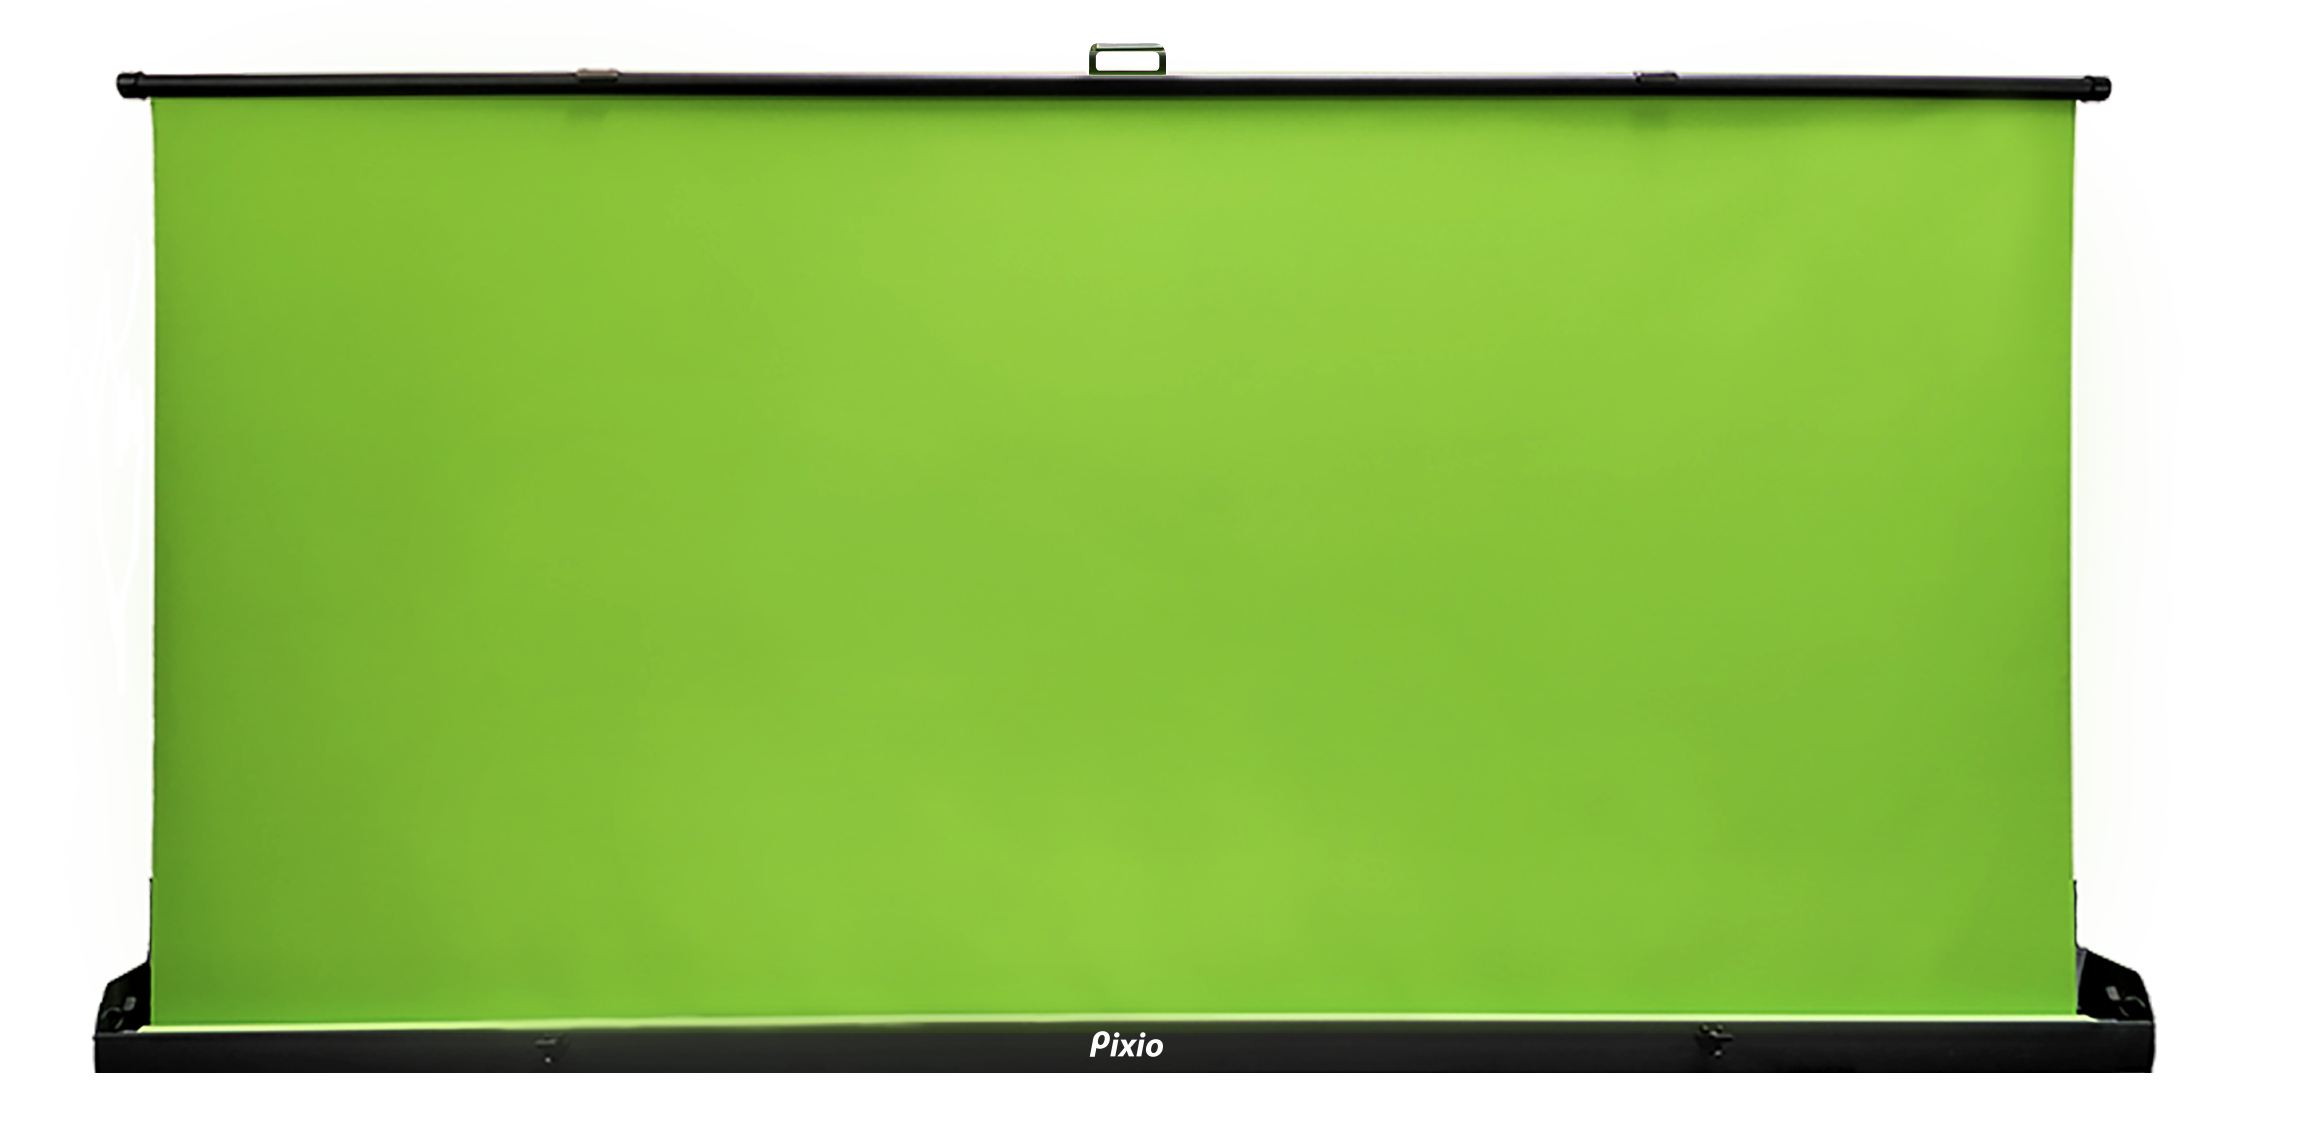 Pixio Green Screen XL Wide/XL Ultrawide - Certified Refurbished